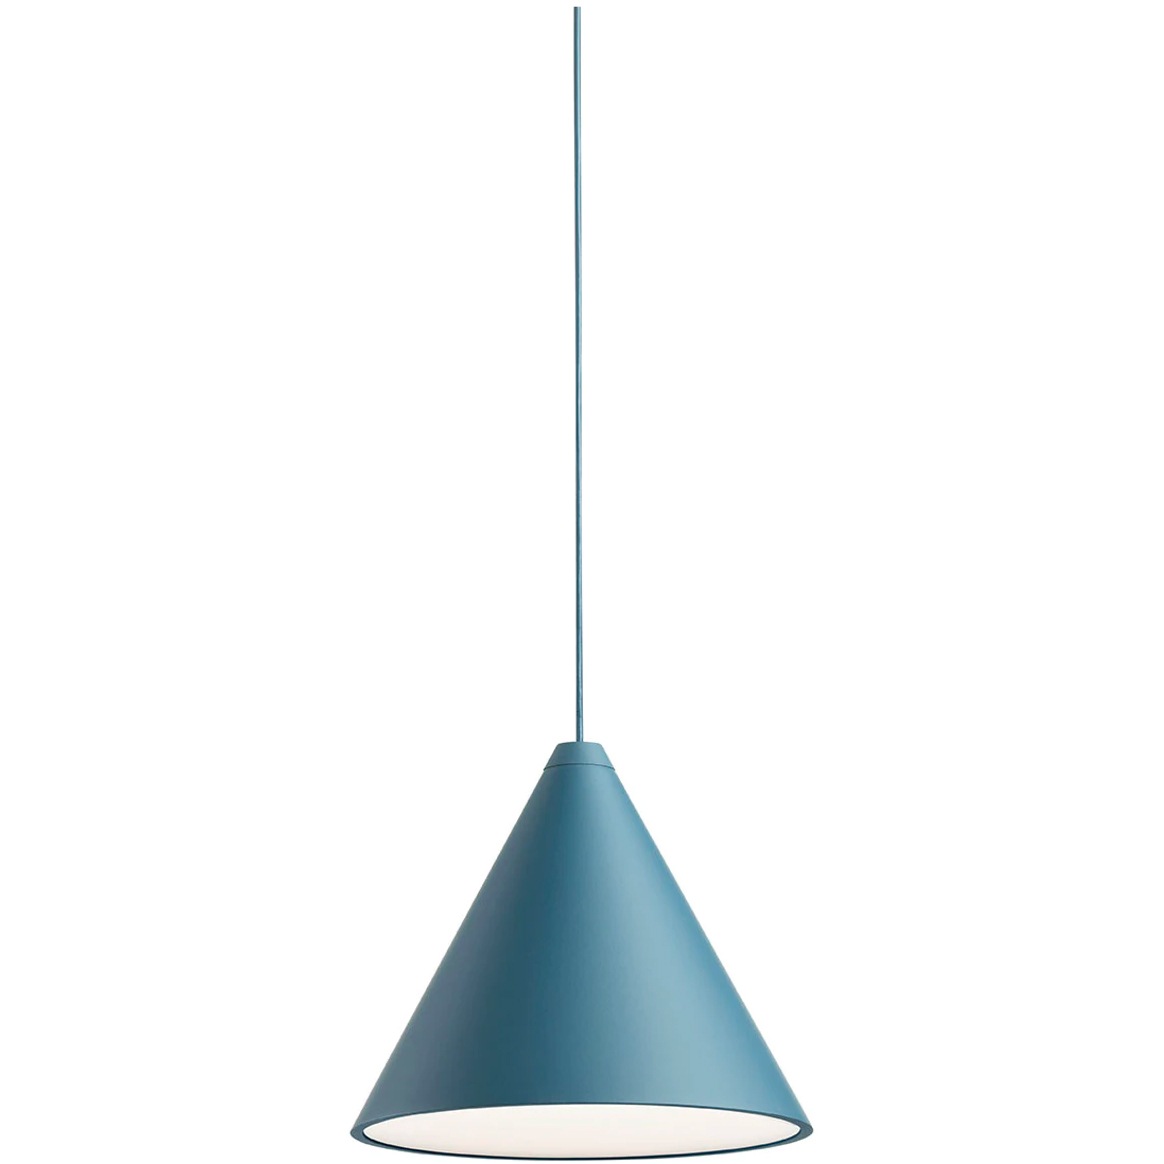 String Light Cone Hängelampe 12M Dimmbar mit Soft Touch, Blau